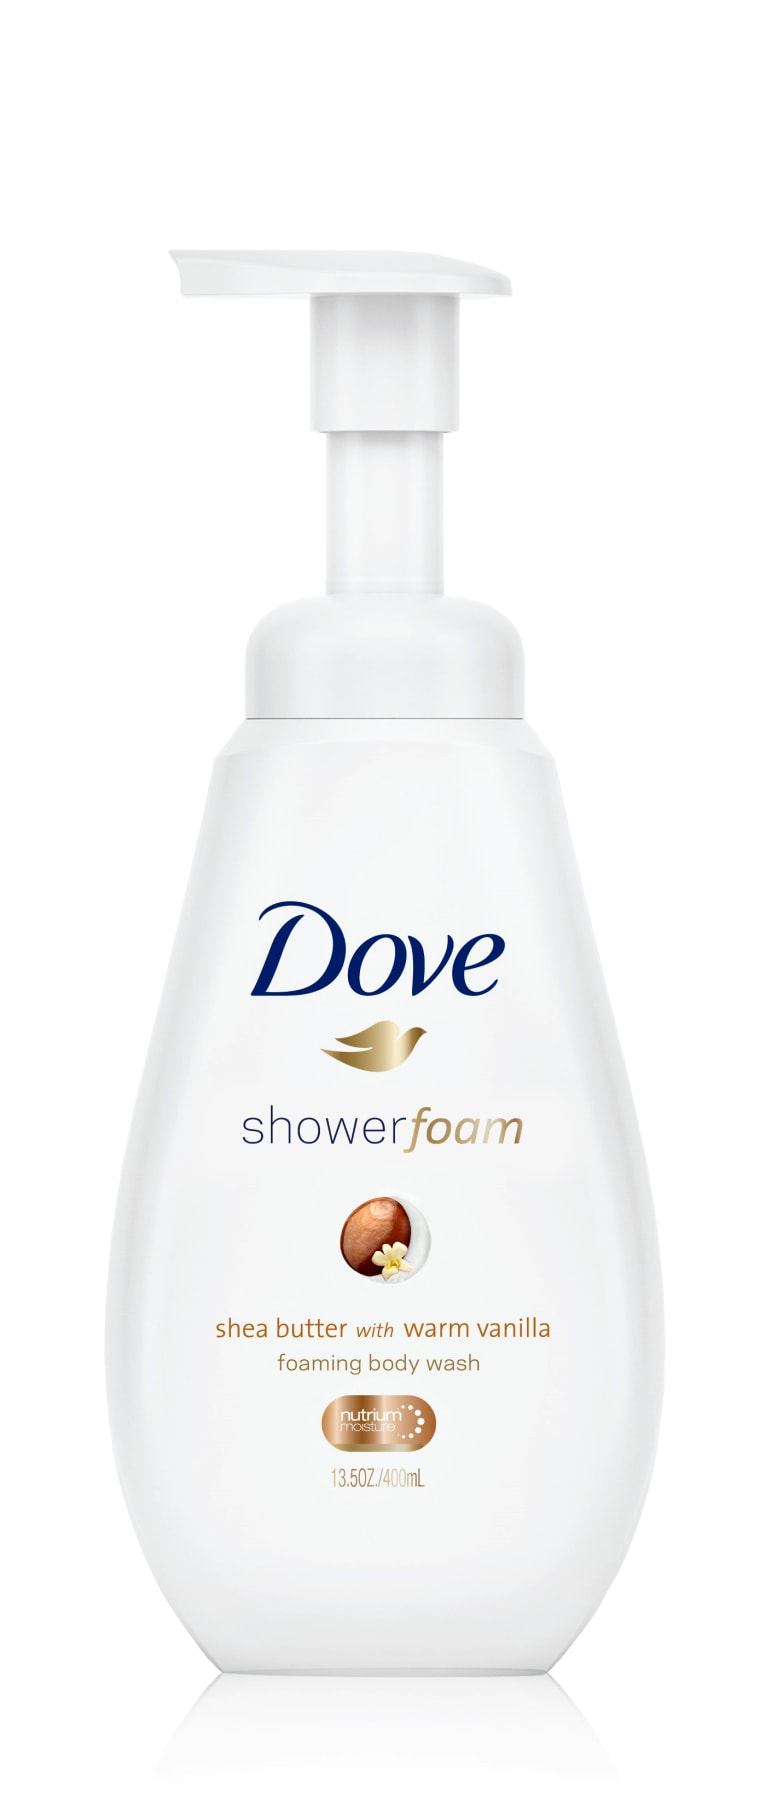 Dove Shower Foam Shea Butter with Warm Vanilla Foaming Body Wash